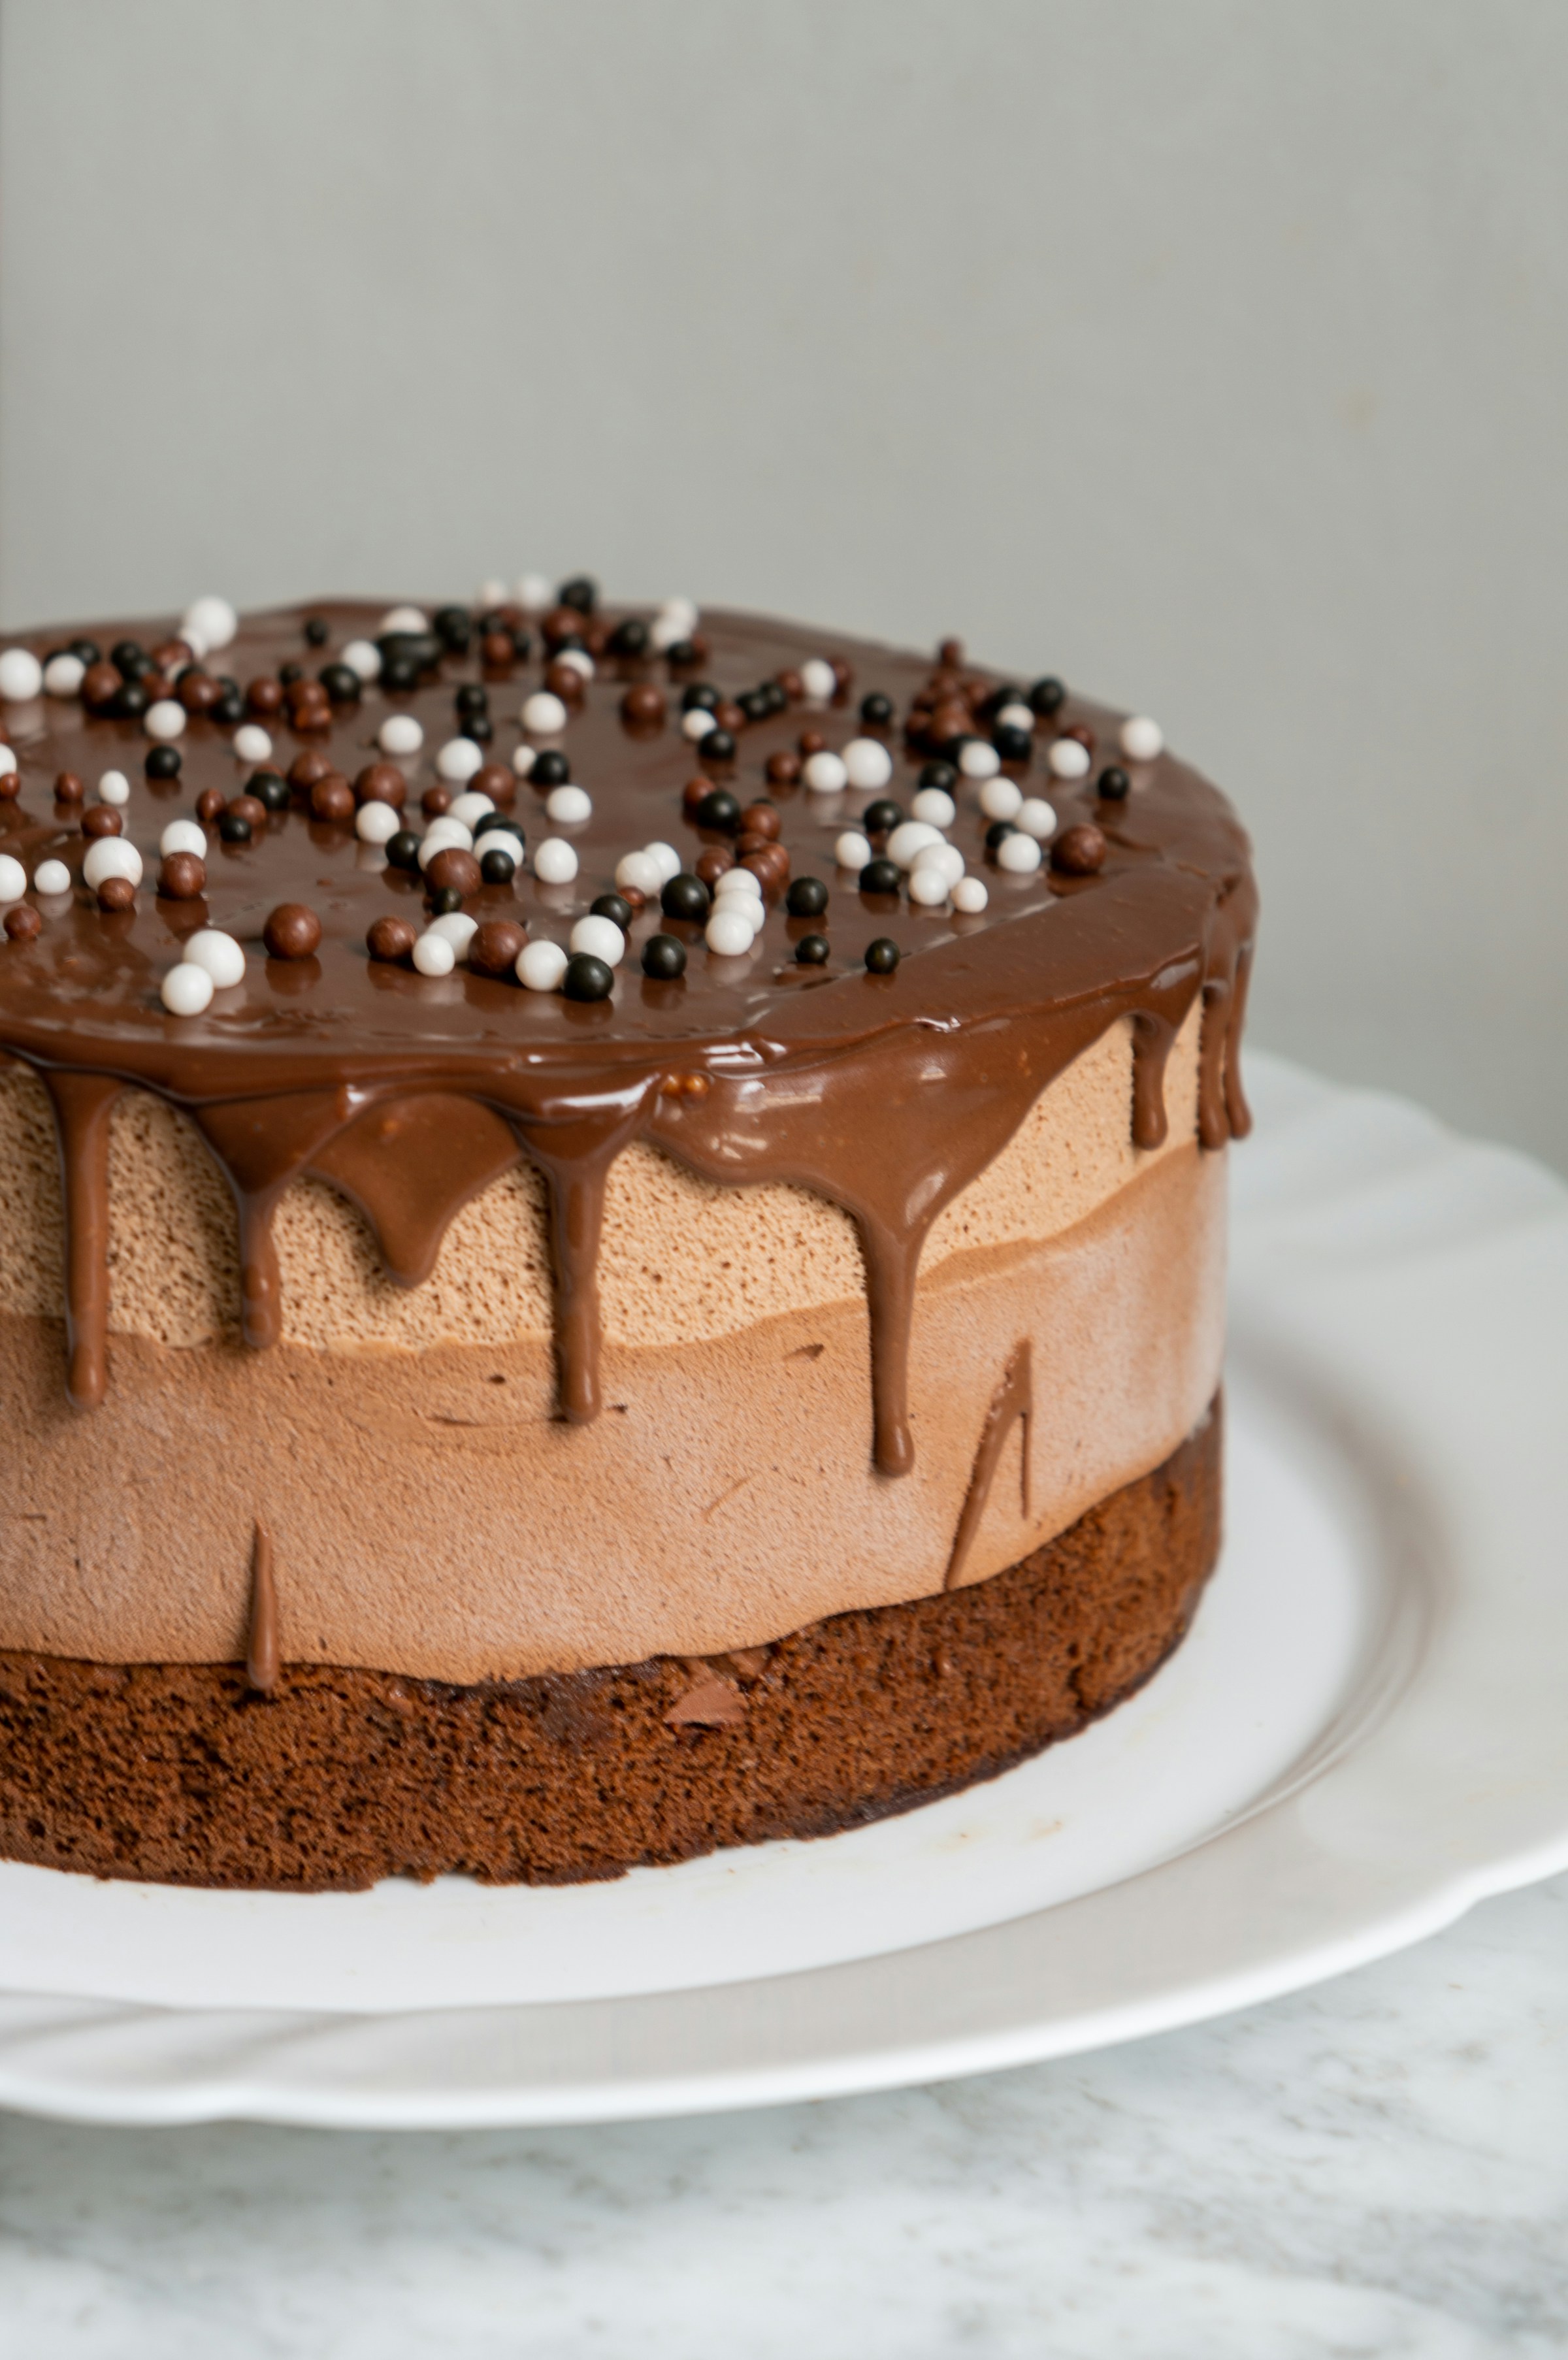 A chocolate cake | Source: Unsplash